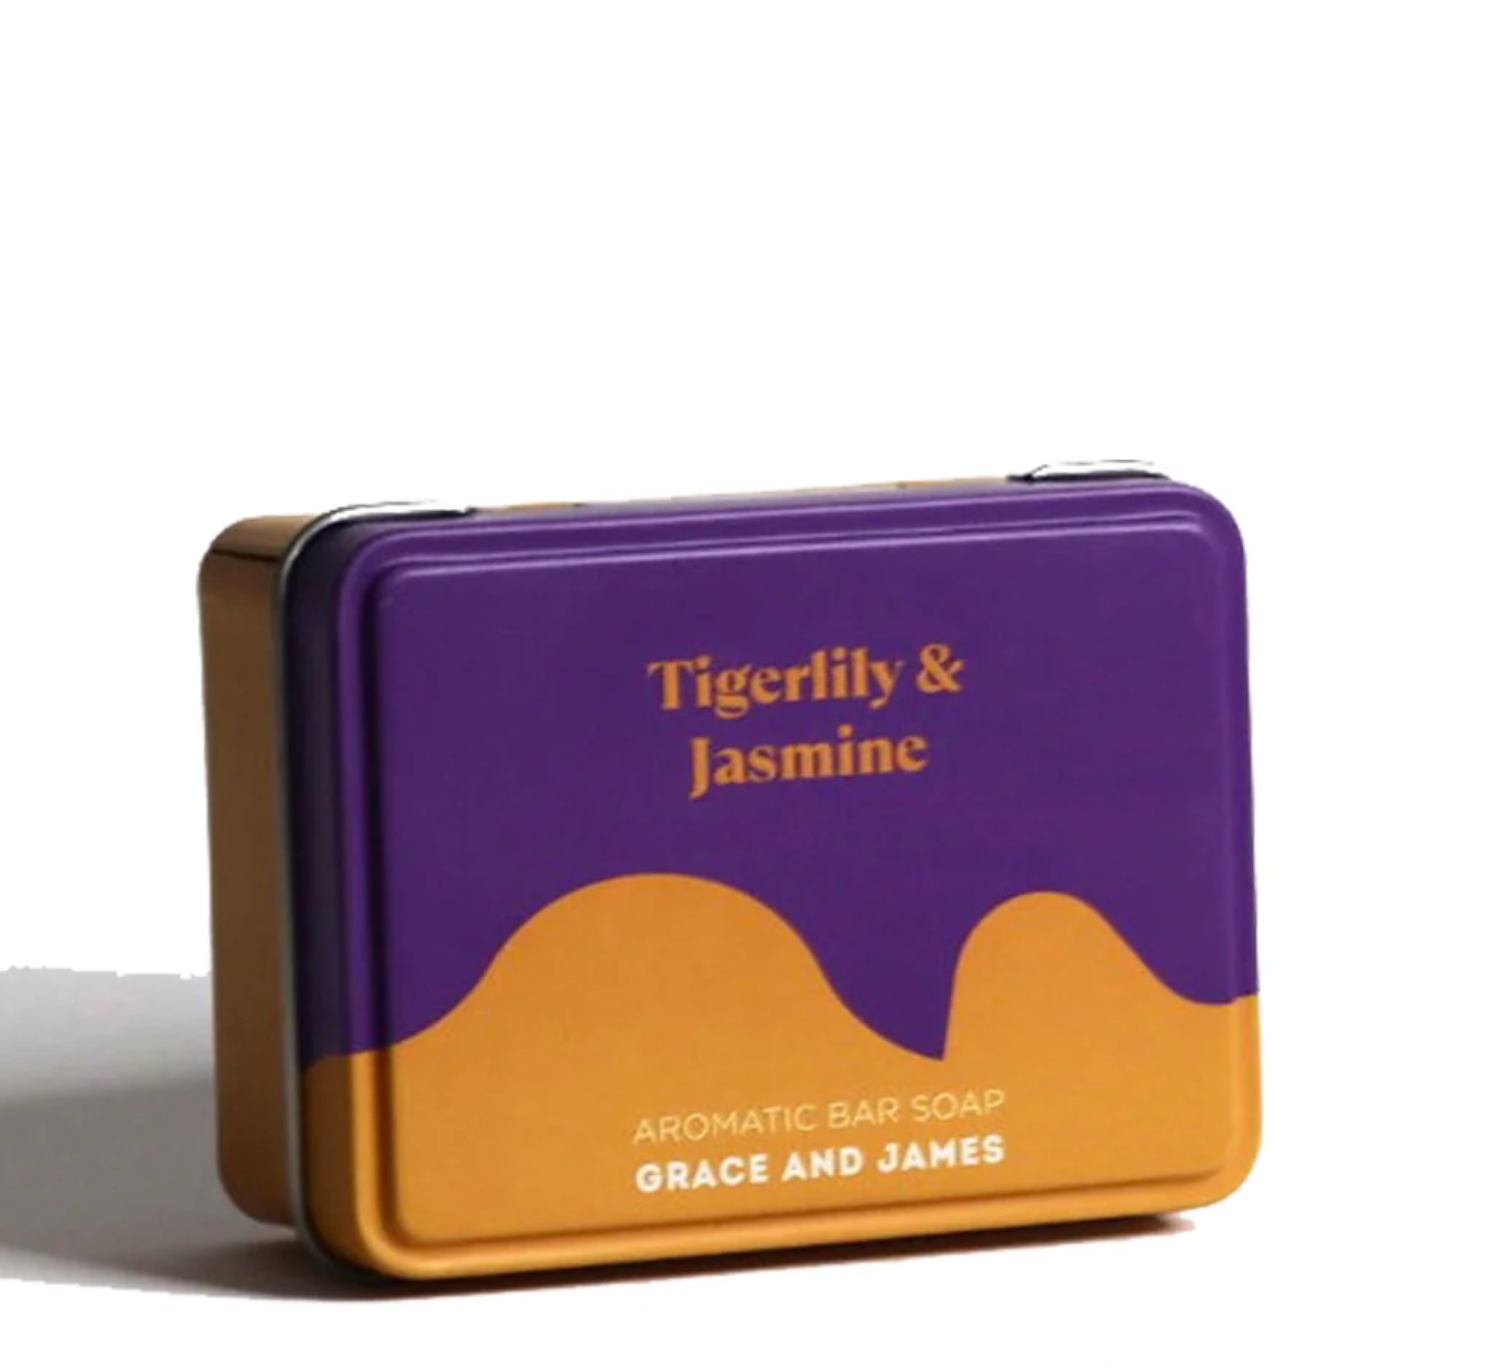 Aromatic Bar Soap / Tigerlily & Jasmine (80g)